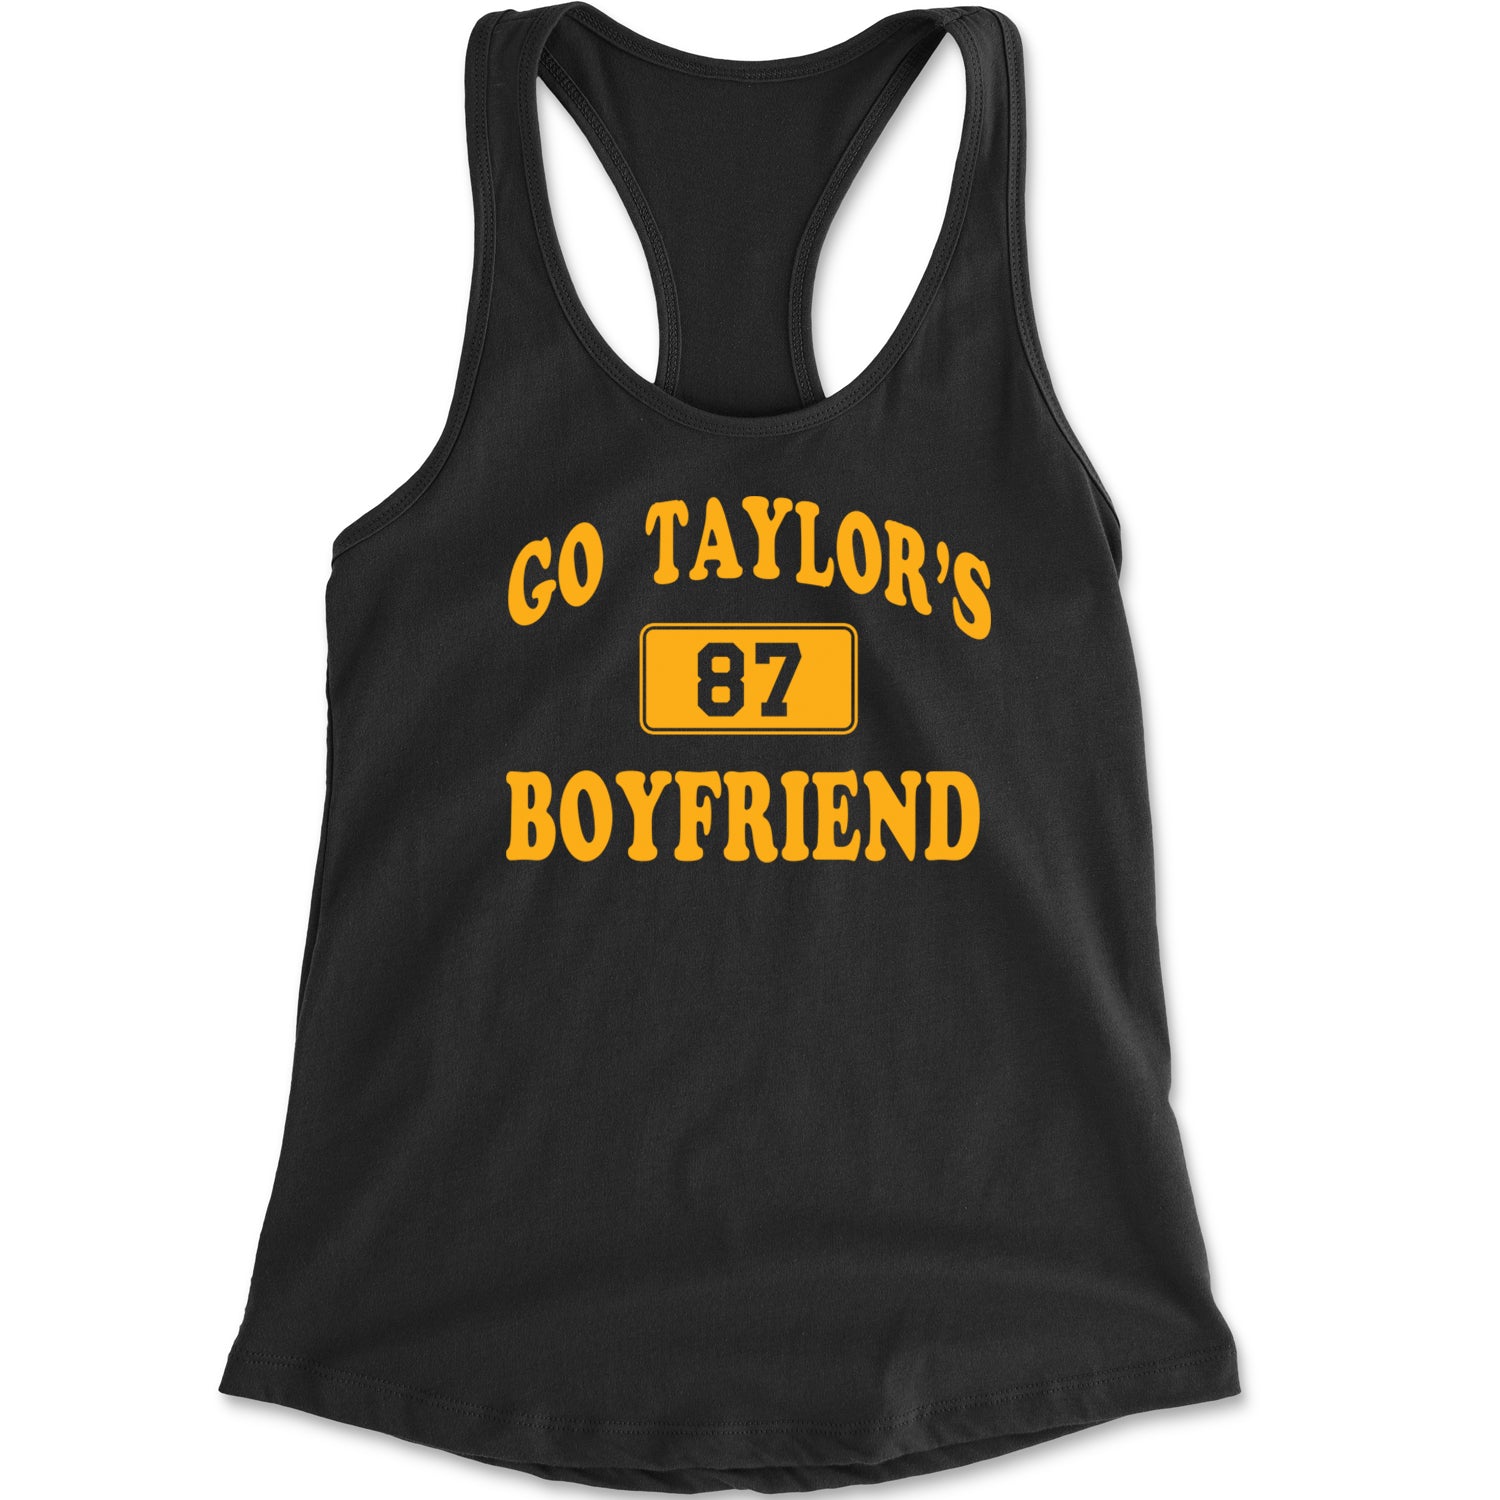 Go Taylor's Boyfriend Kansas City Racerback Tank Top for Women